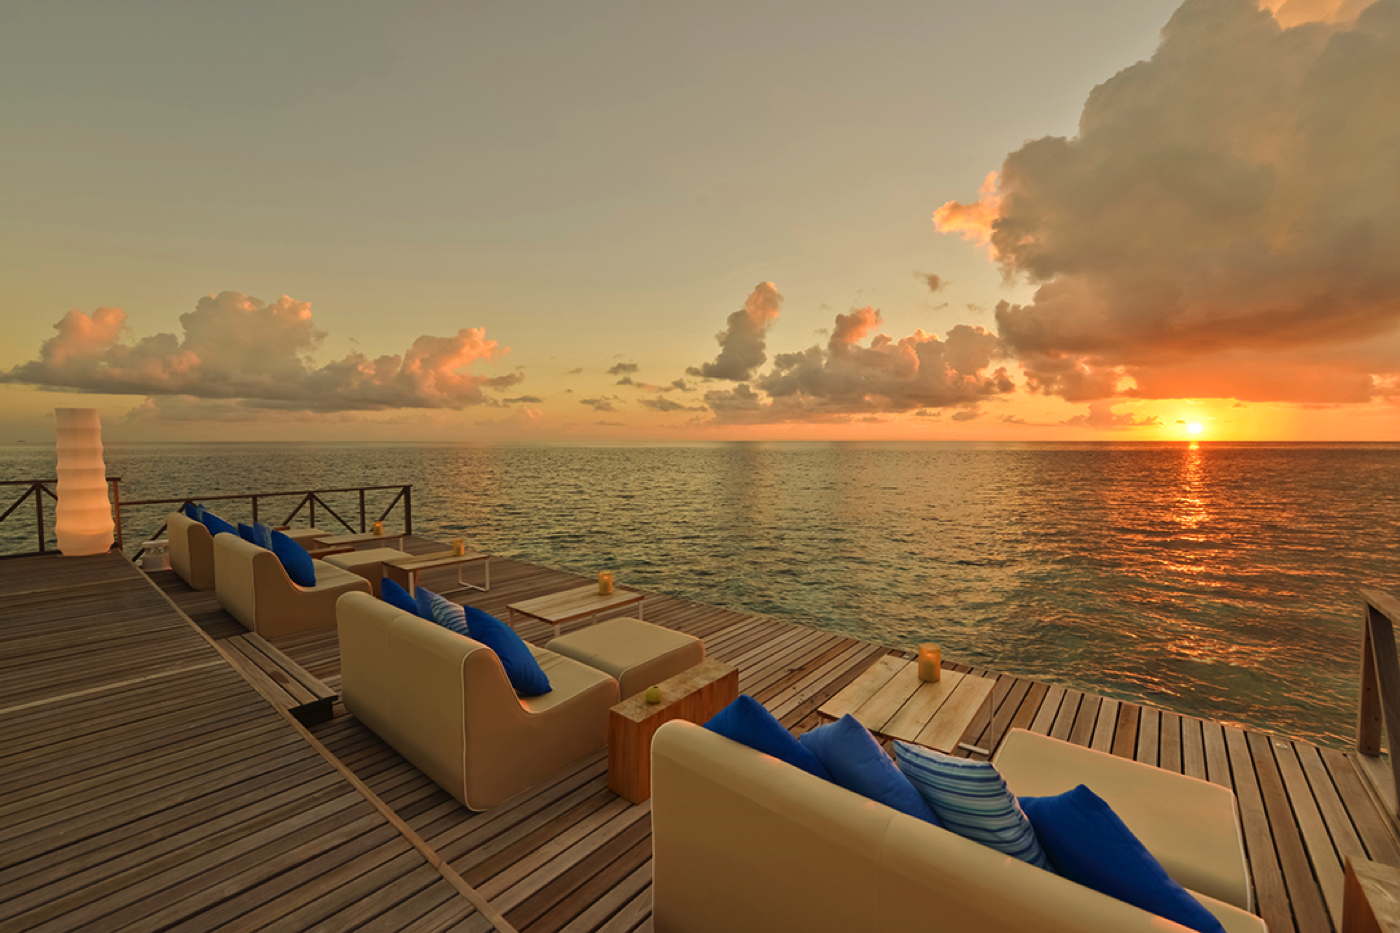 Luxury villa rental in Huvafen Fushi Resort North Malé Atoll Maldives